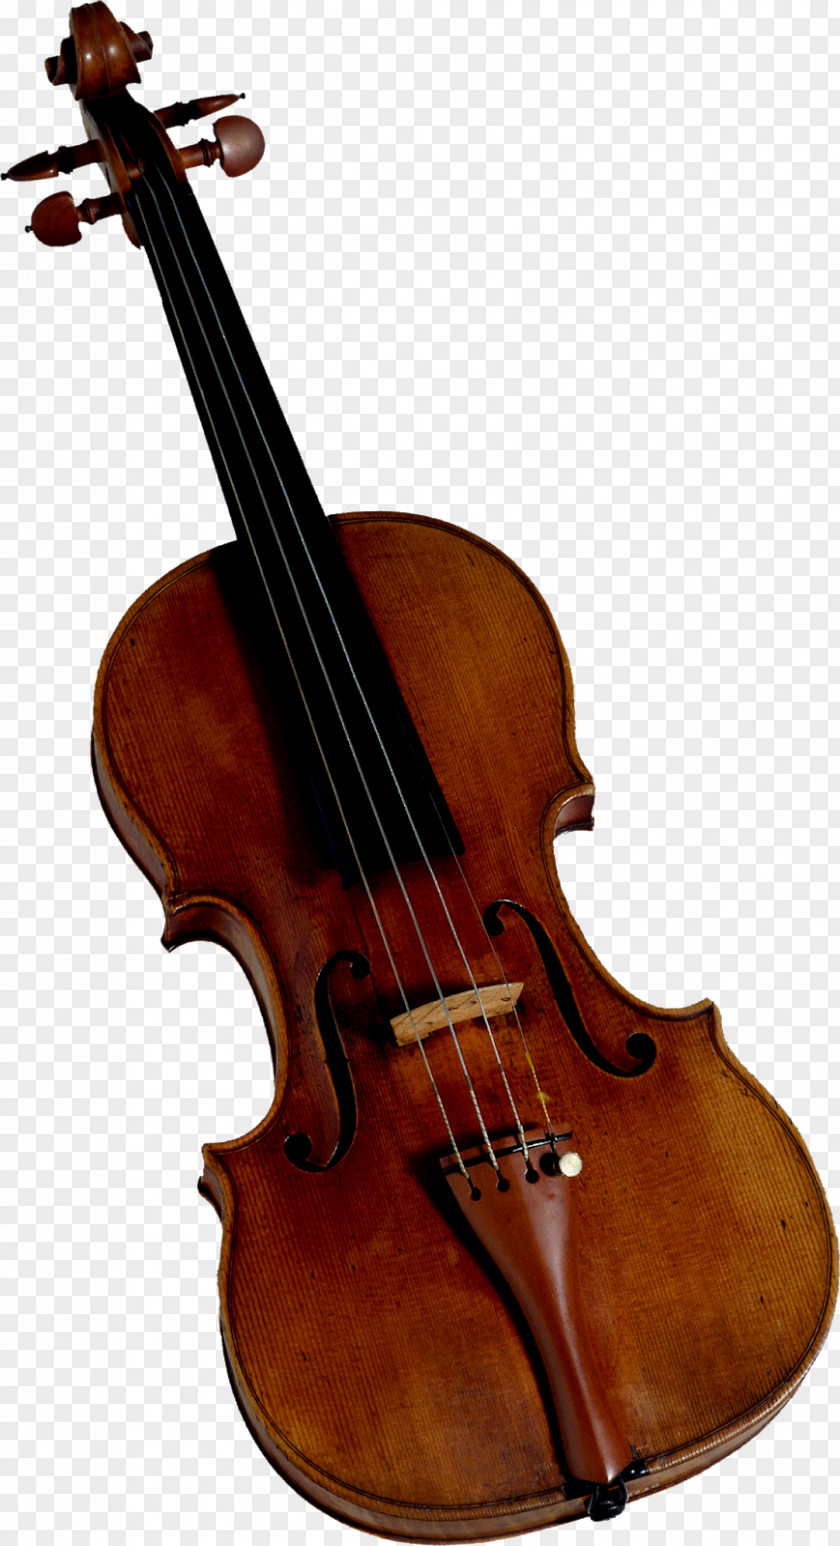 Norway Ecstatic Fiddle Violin Clip Art Image PNG